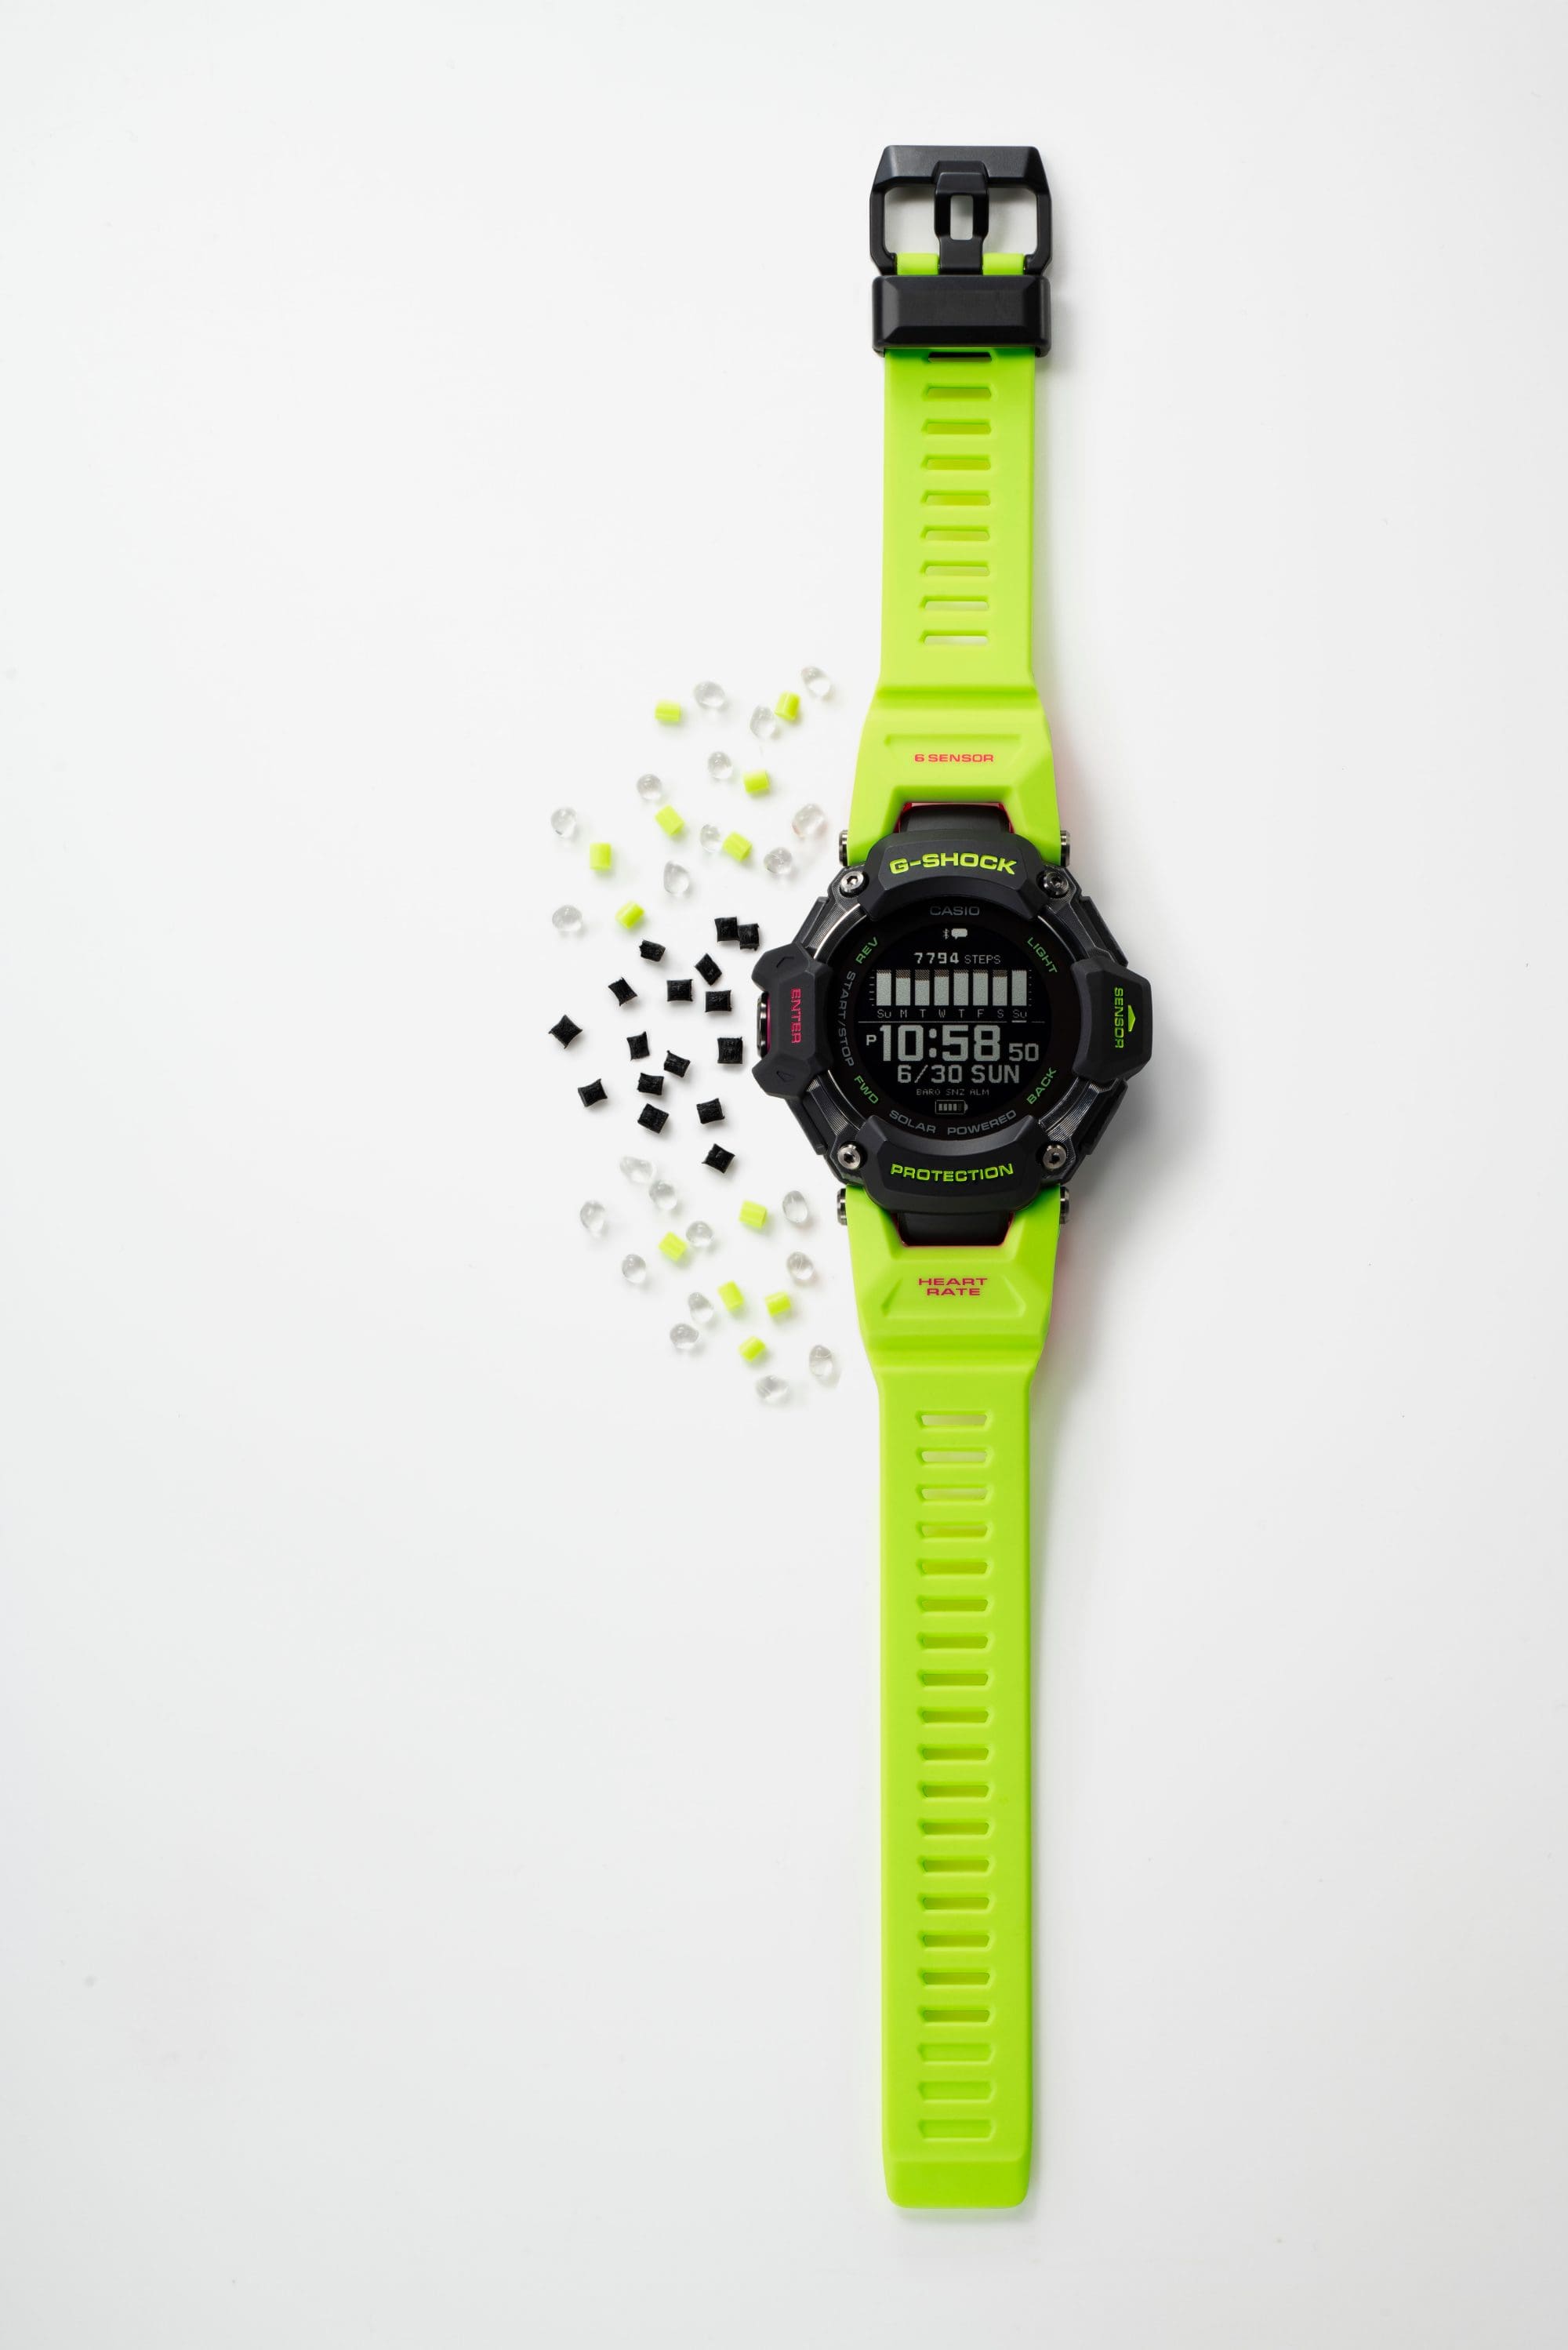 GBD-H2000-1A9 Watch made of biomass plastic